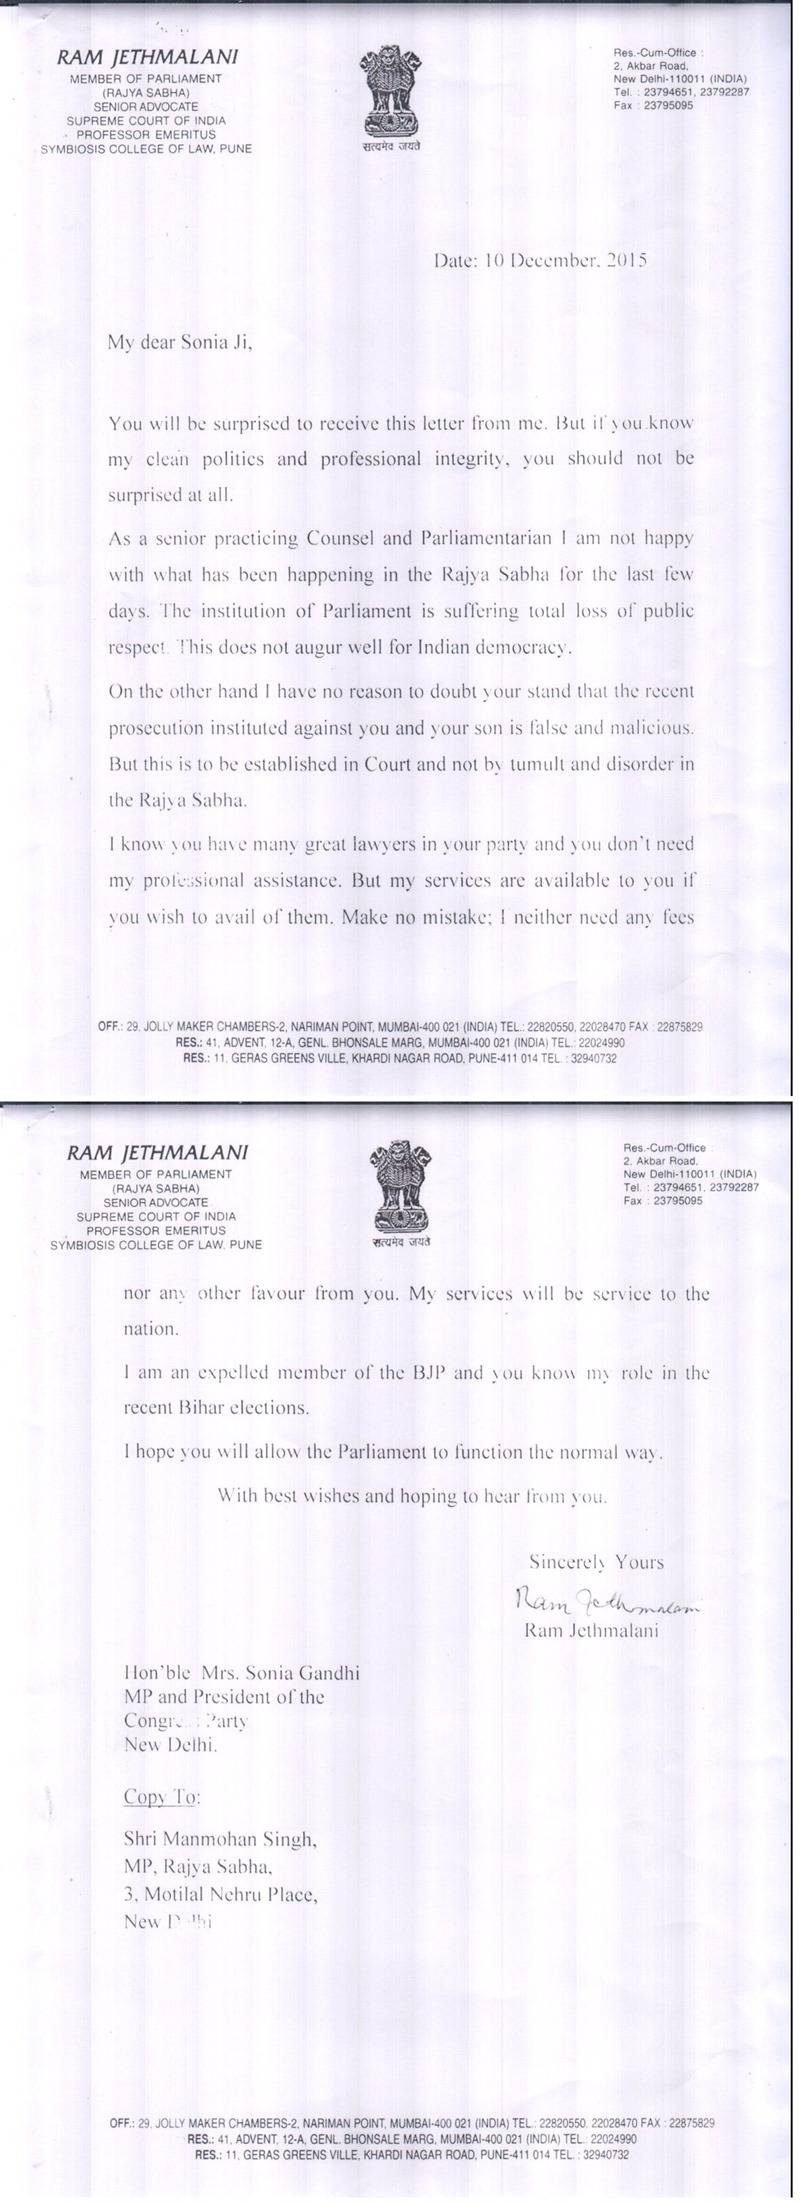 Ram Jethmalani's letter to Sonia Gandhi